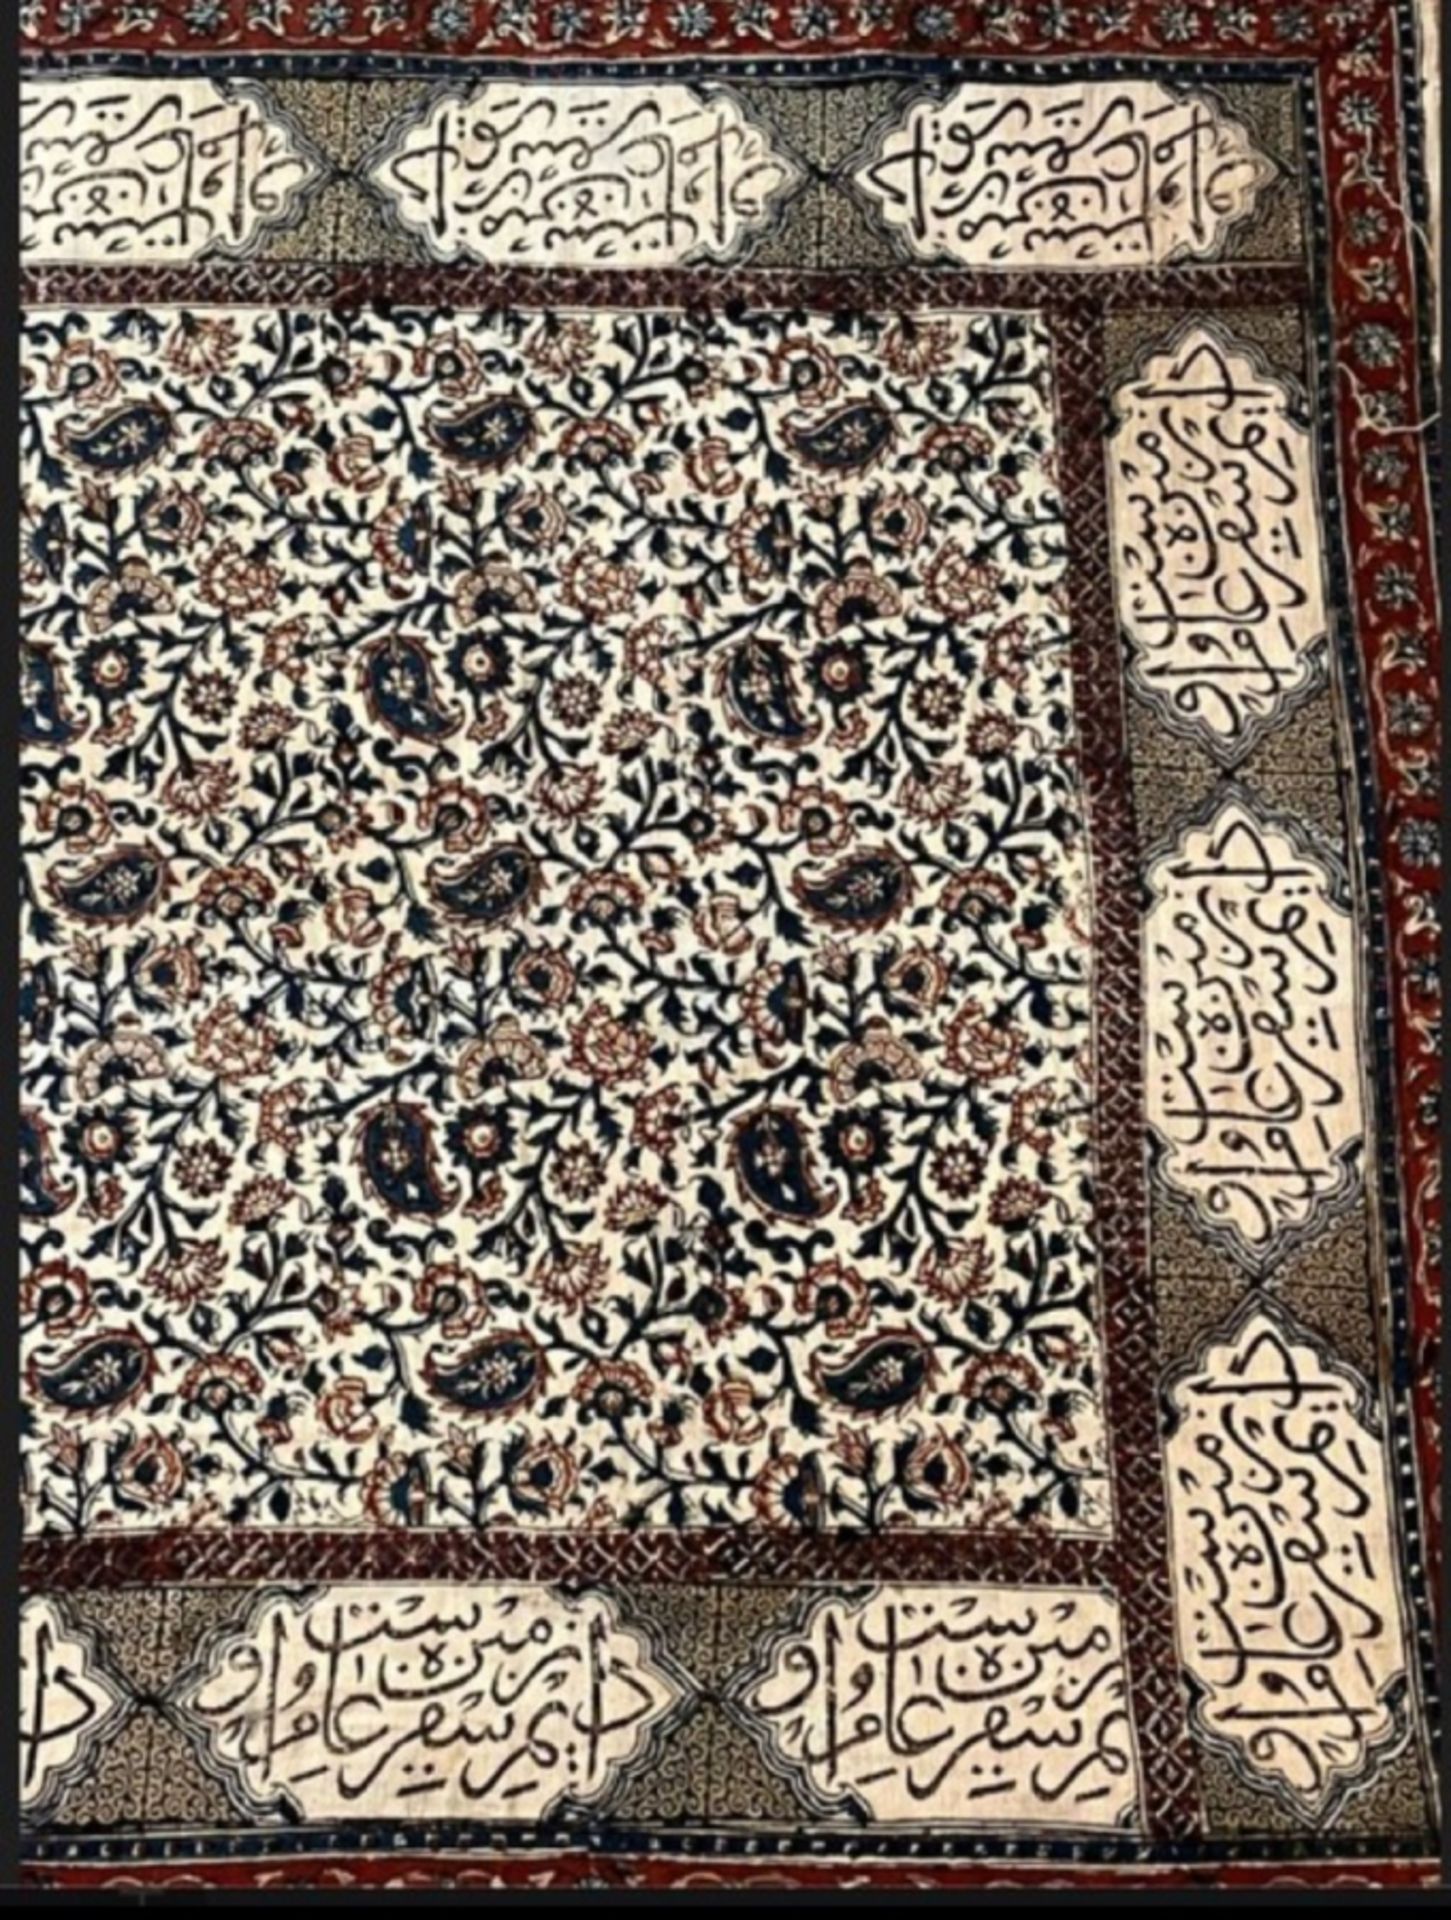 Kalamkari textile with islamic calligraphy - Image 2 of 12